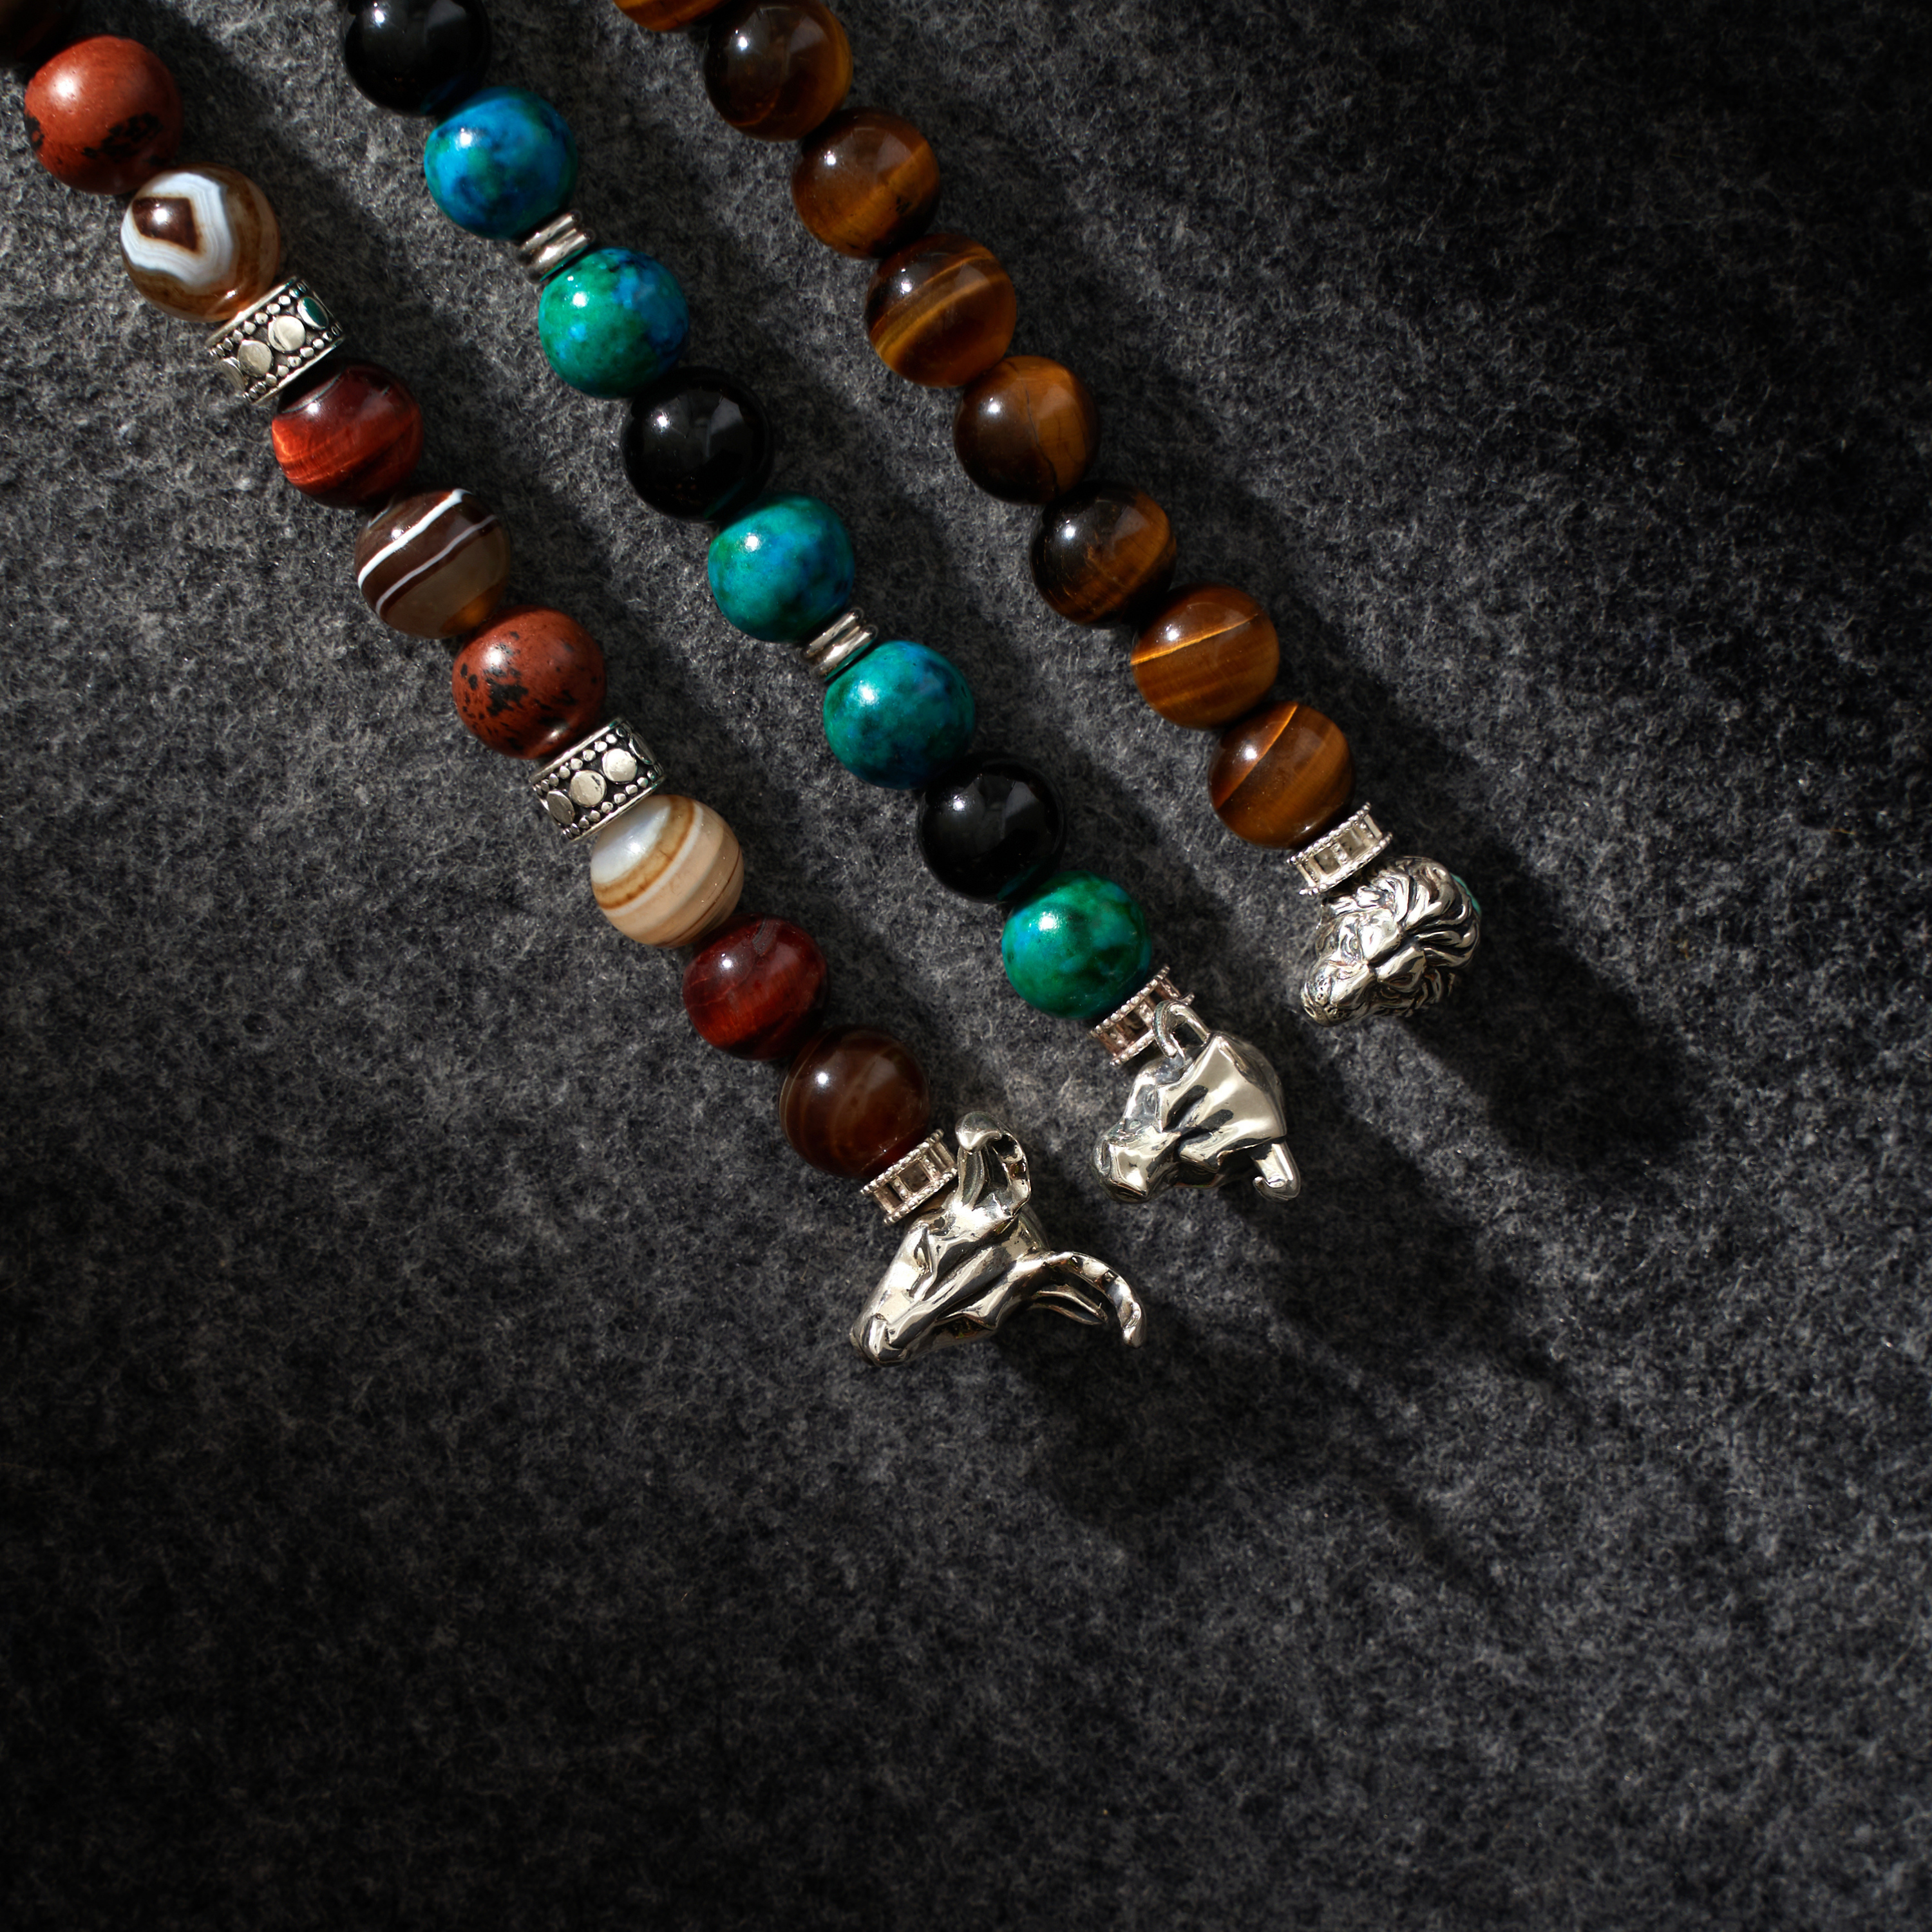 Ravenclaw Tile Bead Stretch Bracelet | Blue Metal | Waterproof Bracelets for Men | Men's Stylish Jewelry & Accessories | Pura Vida